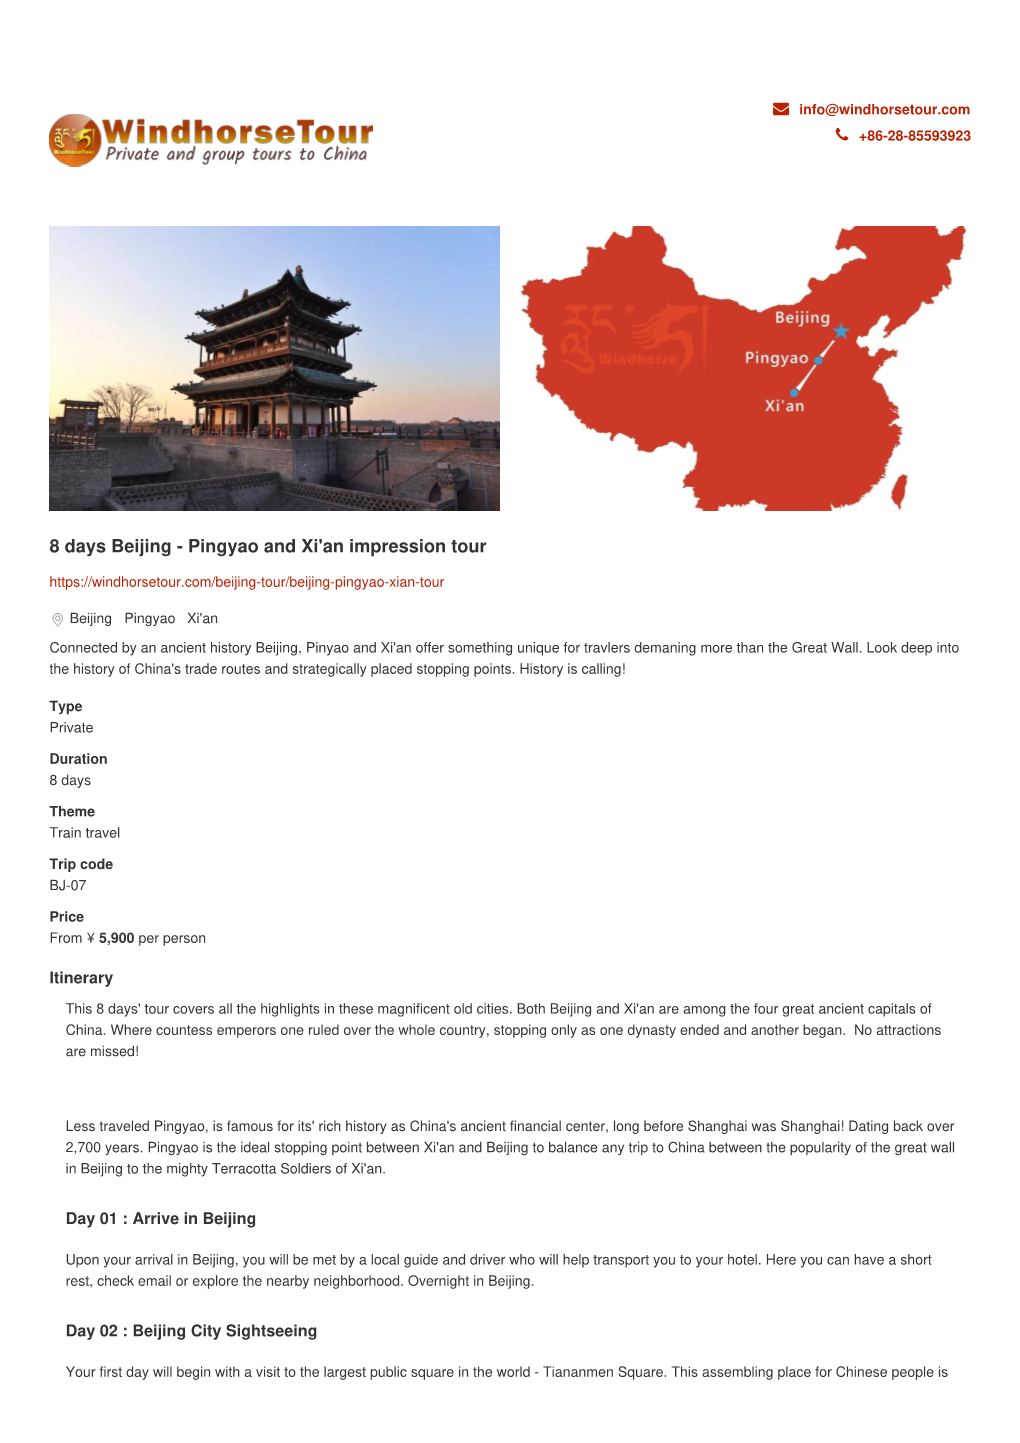 8 Days Beijing - Pingyao and Xi'an Impression Tour